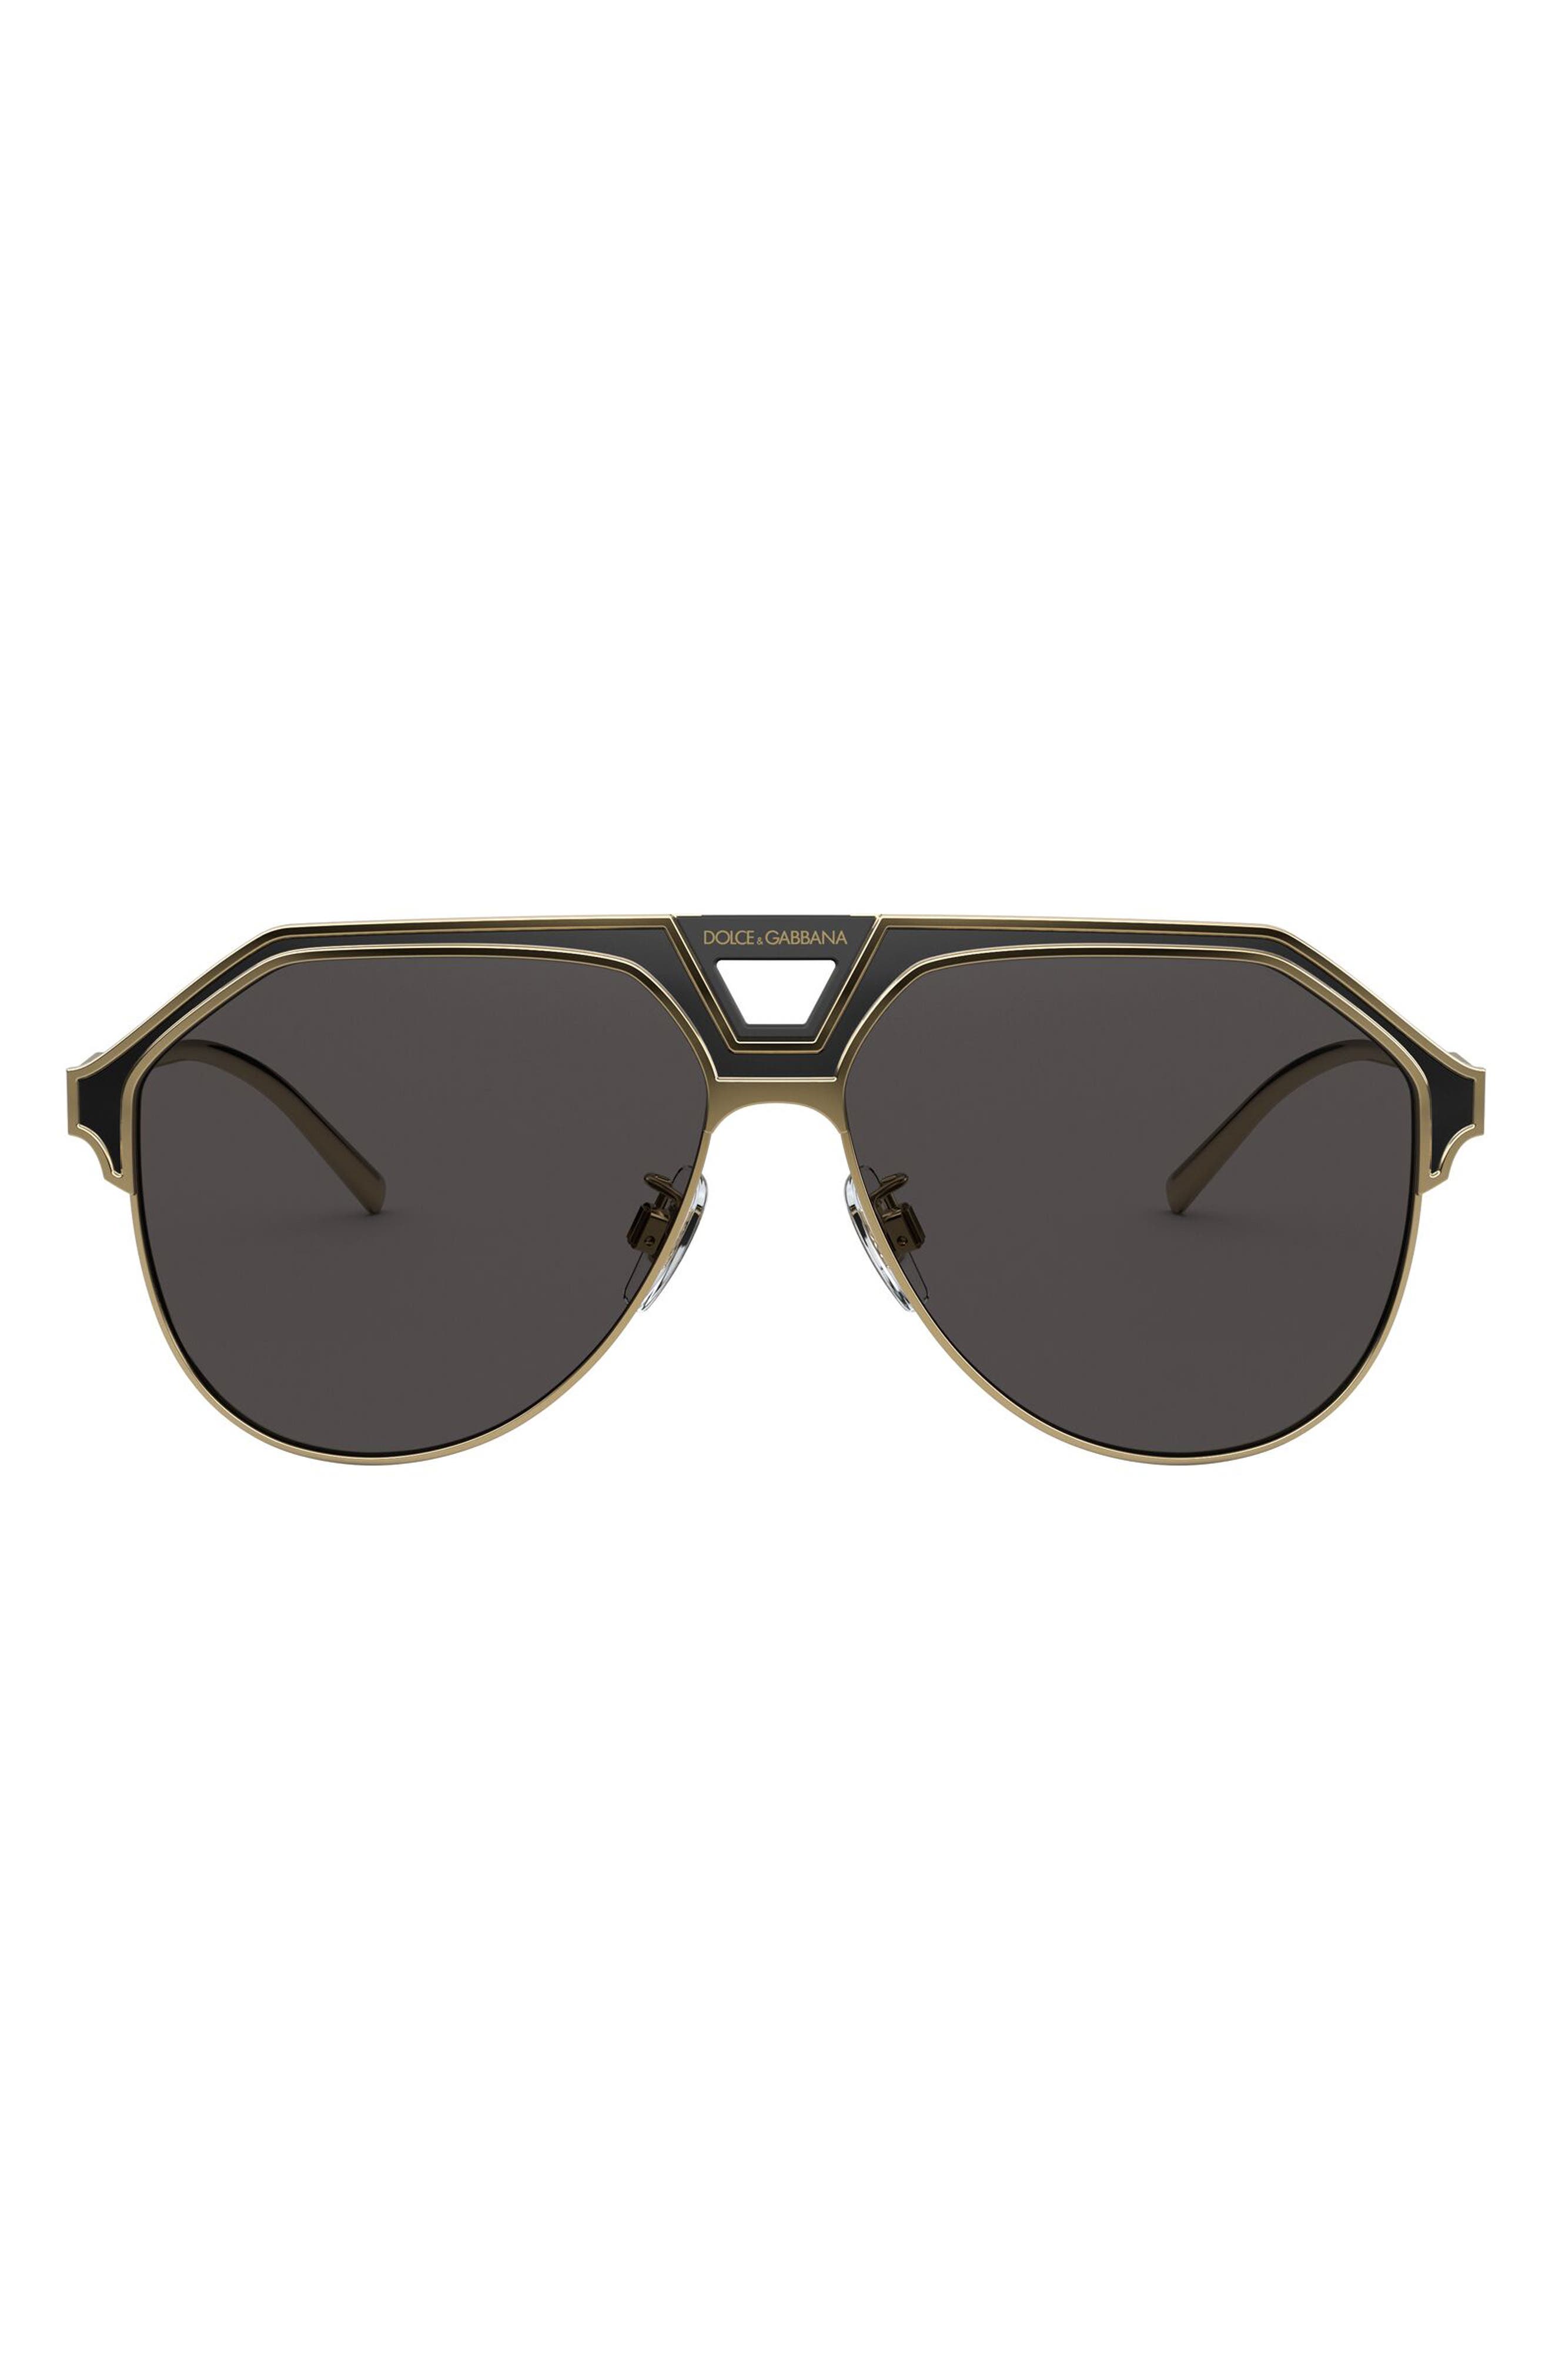 Dolce & Gabbana 60mm Gradient Aviator Sunglasses in Gold/Black Matte/Grey at Nordstrom